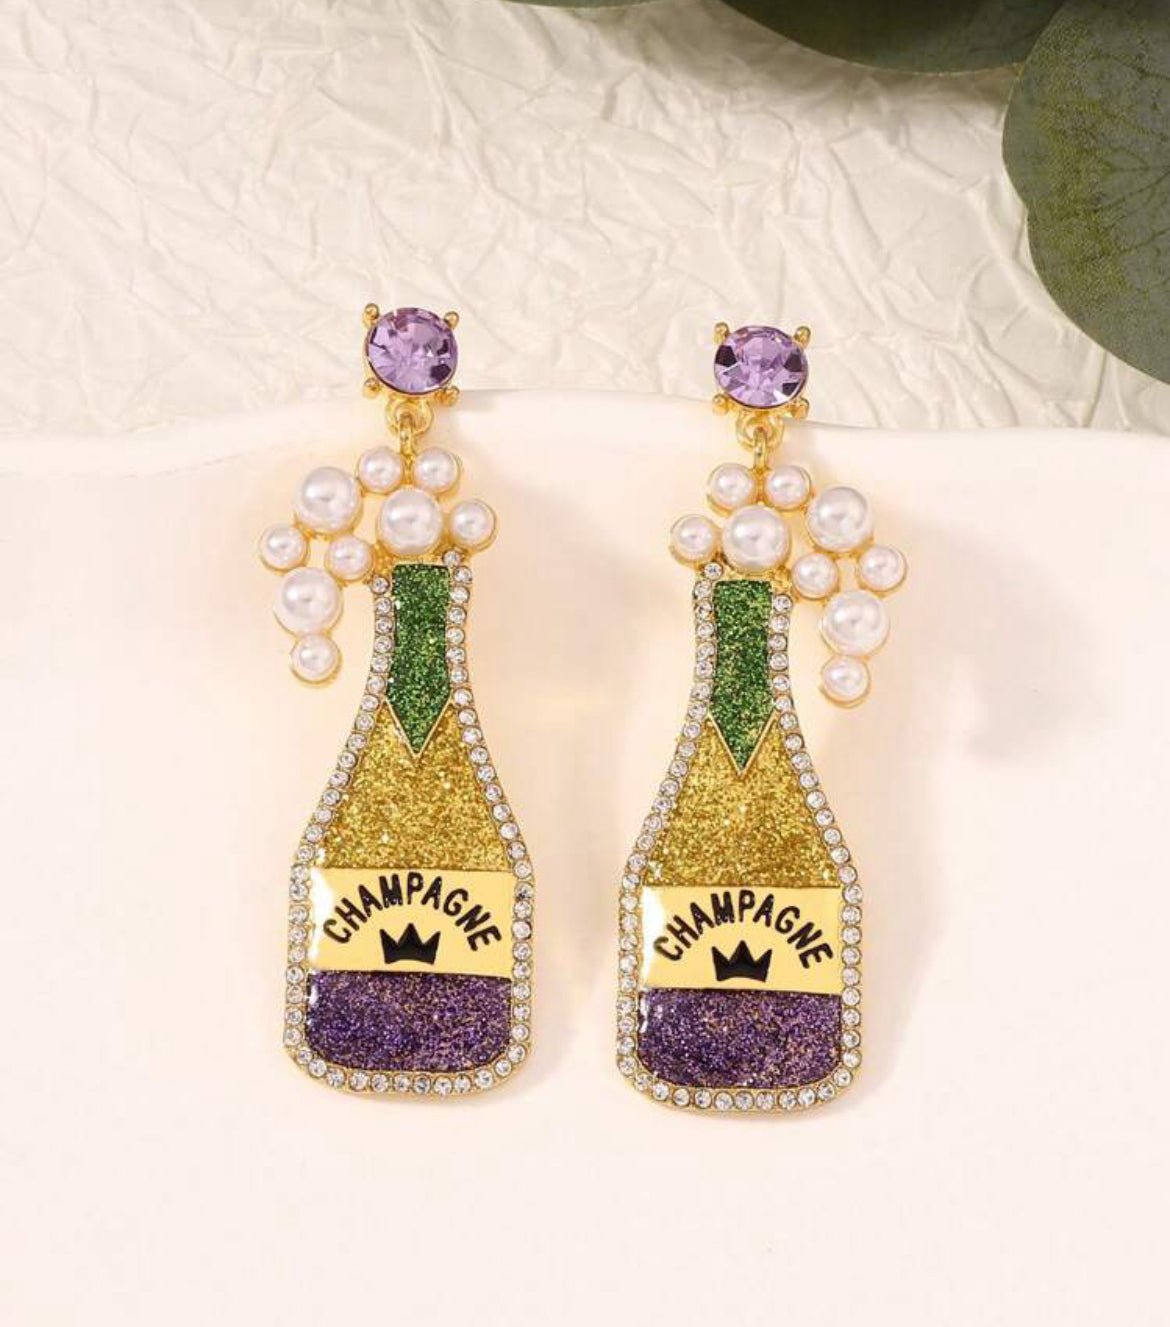 Mardi Gras Champagne Bottles - The Bump & Company LLC